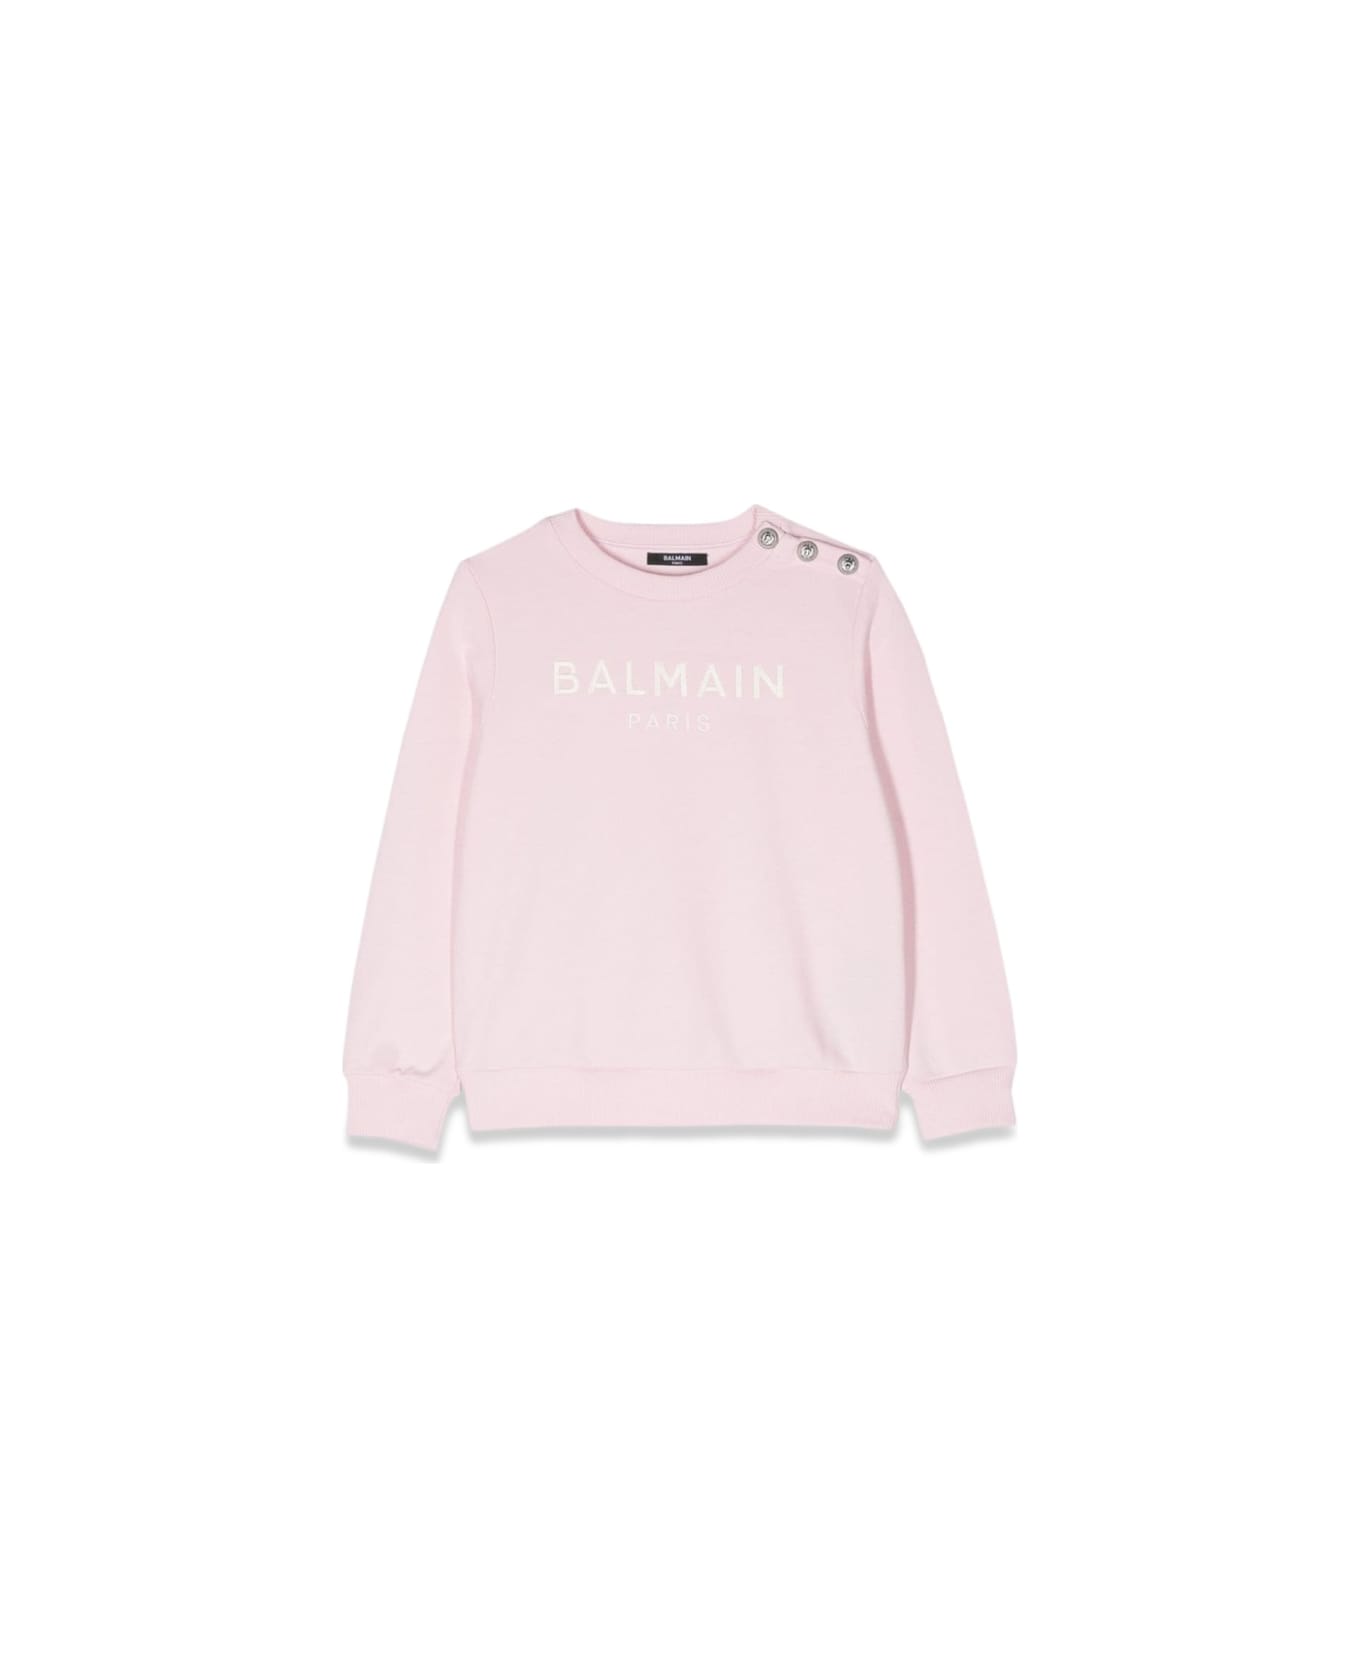 Balmain Sweatshirt - PINK